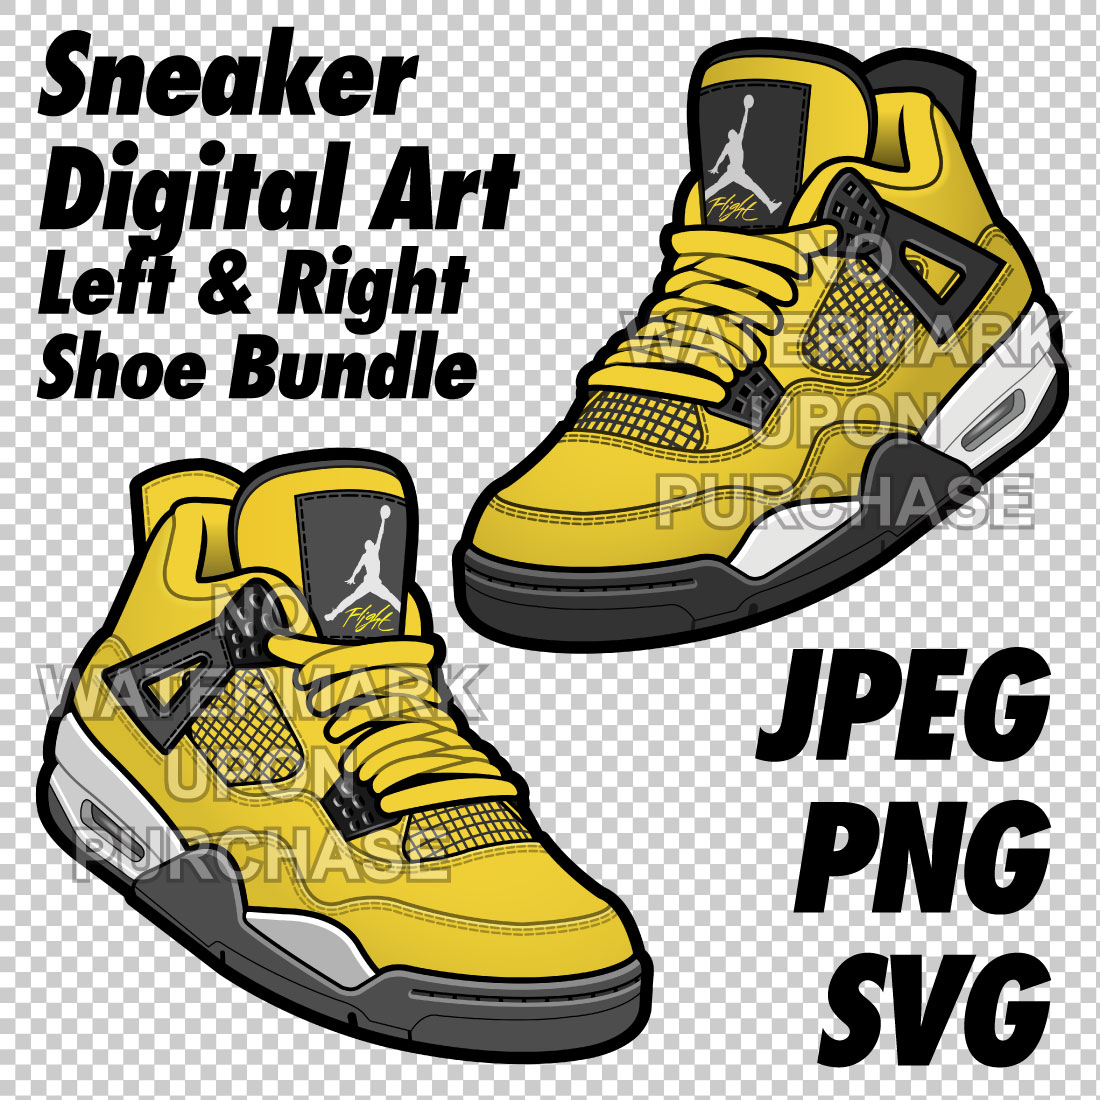 Air Jordan 4 Lightning JPEG PNG SVG Sneaker Art Right & Left shoe bundle with lace swap Digital Download cover image.